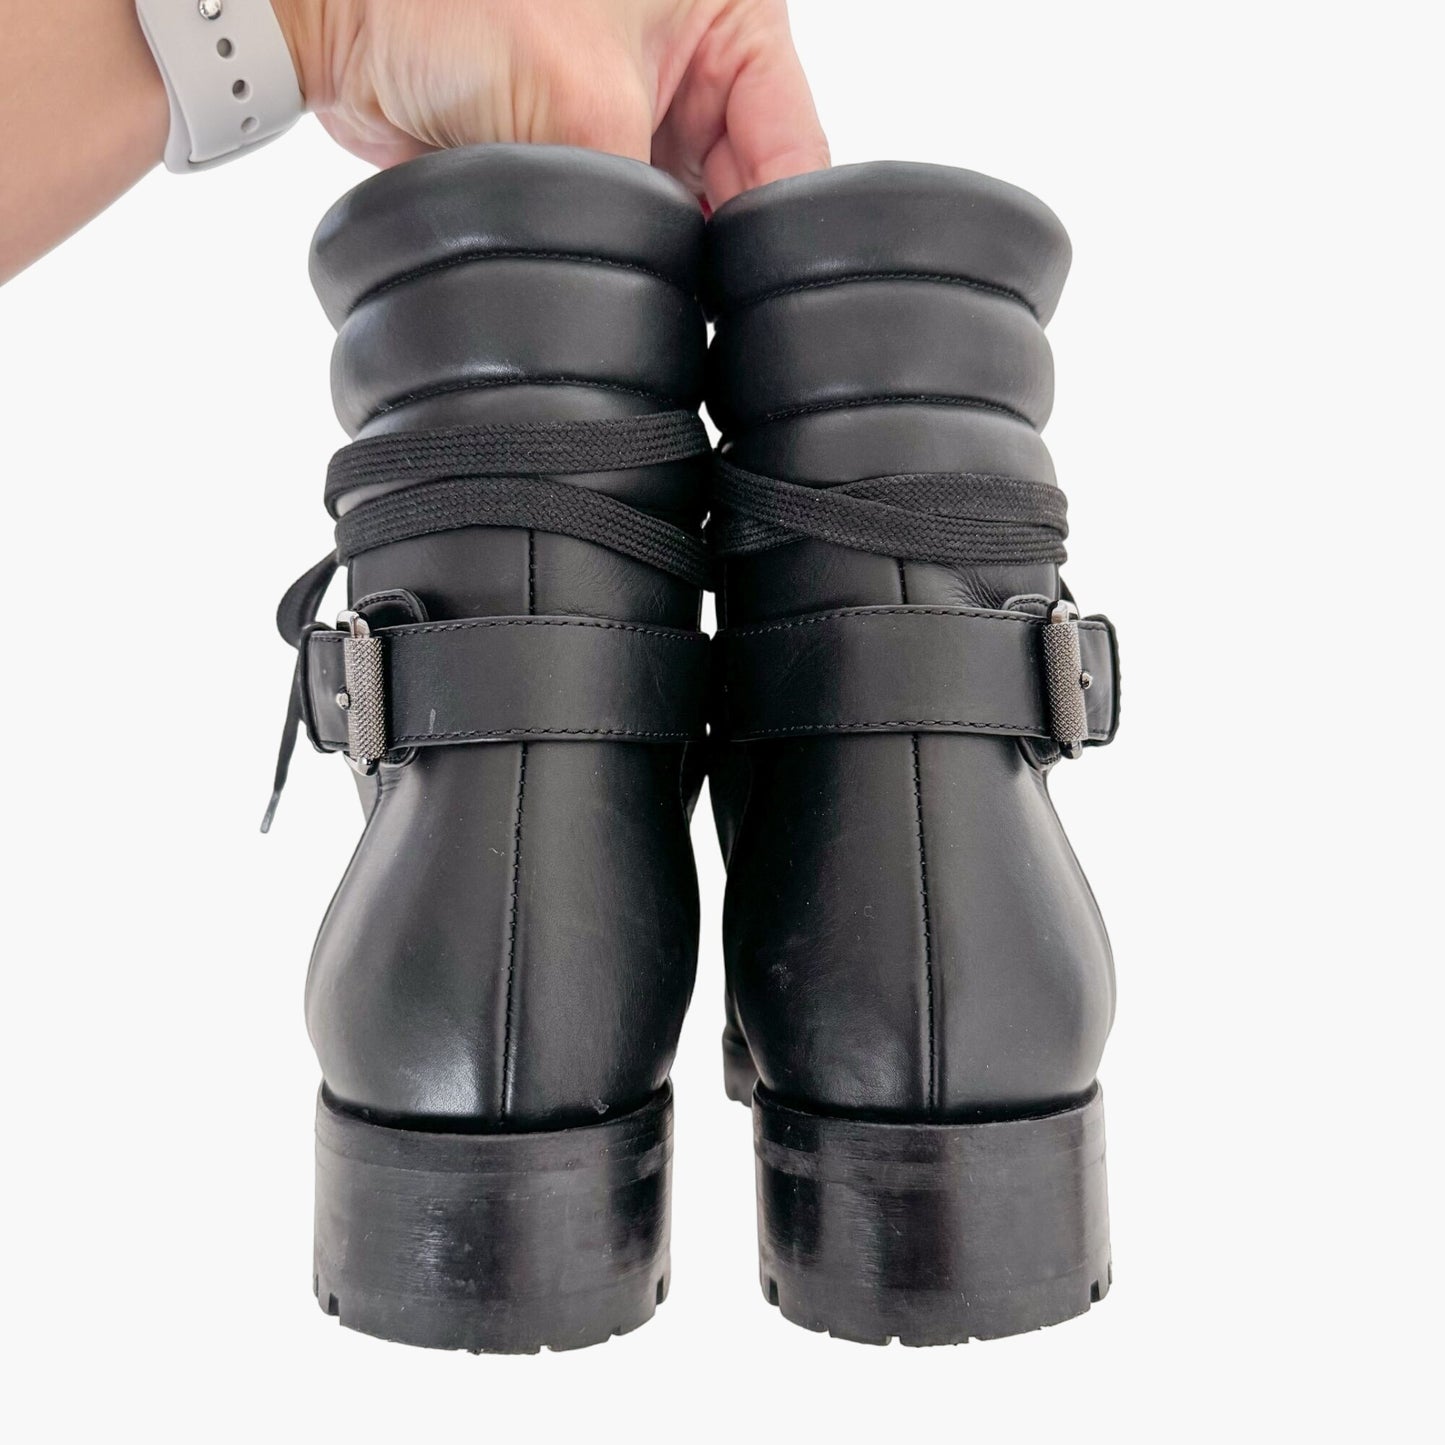 Christian Louboutin Who Runs Flat Boots in Black Calf Size 38.5